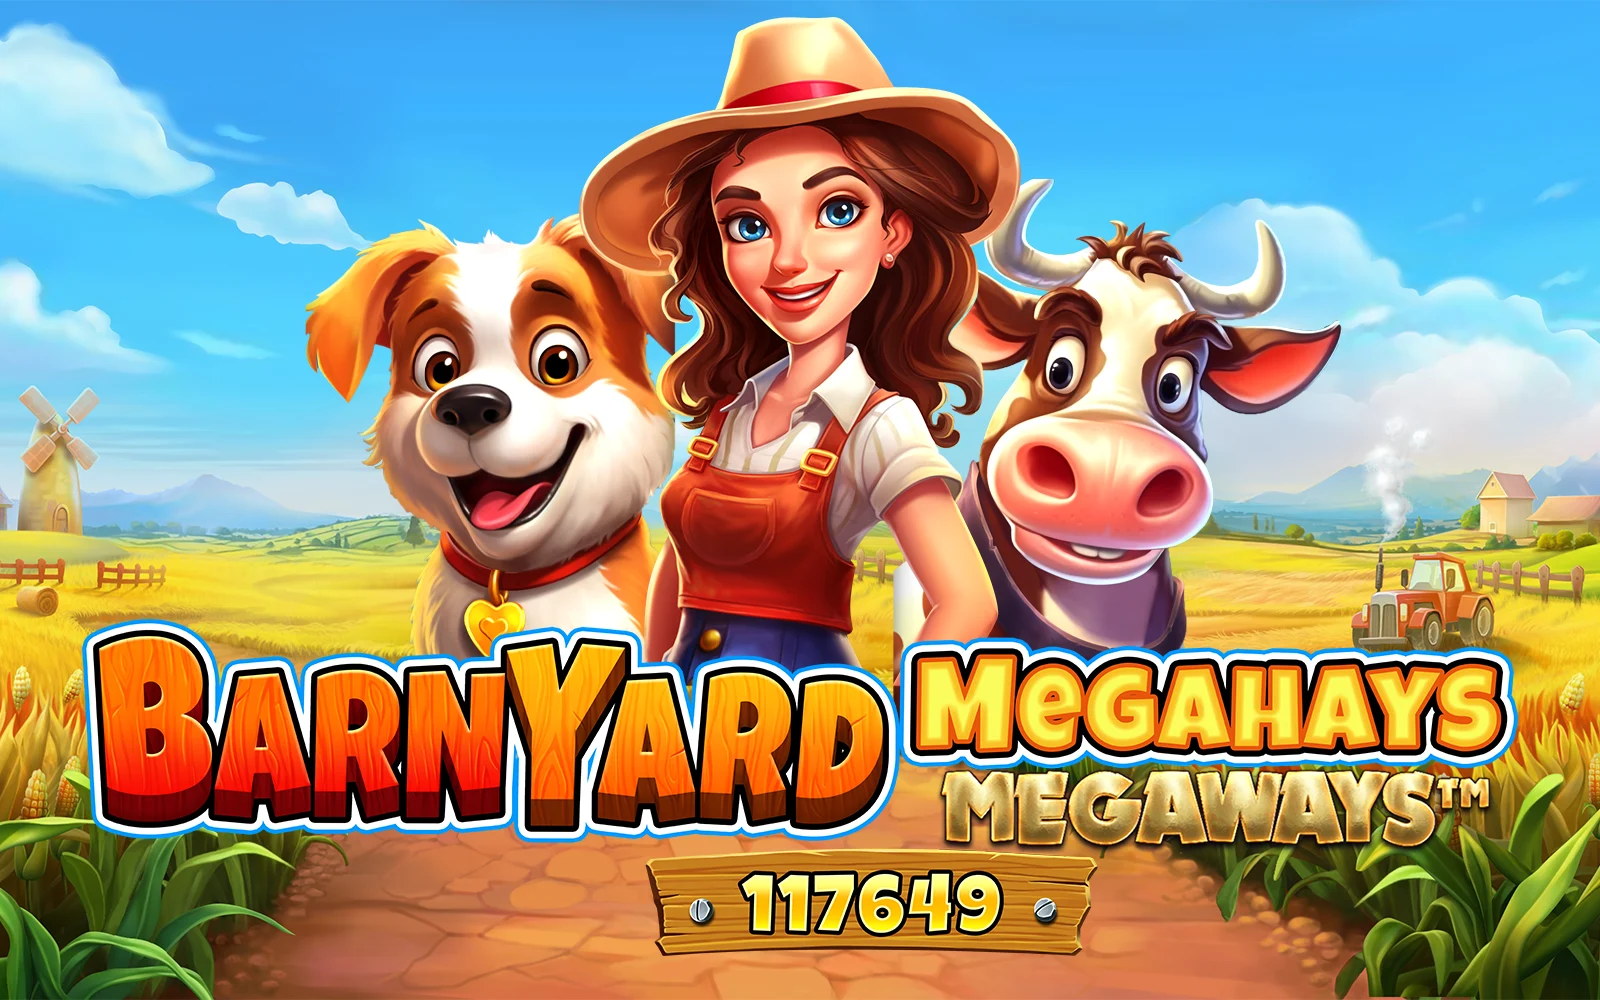 Играйте в Barnyard Megahays Megaways™ в онлайн-казино Starcasino.be